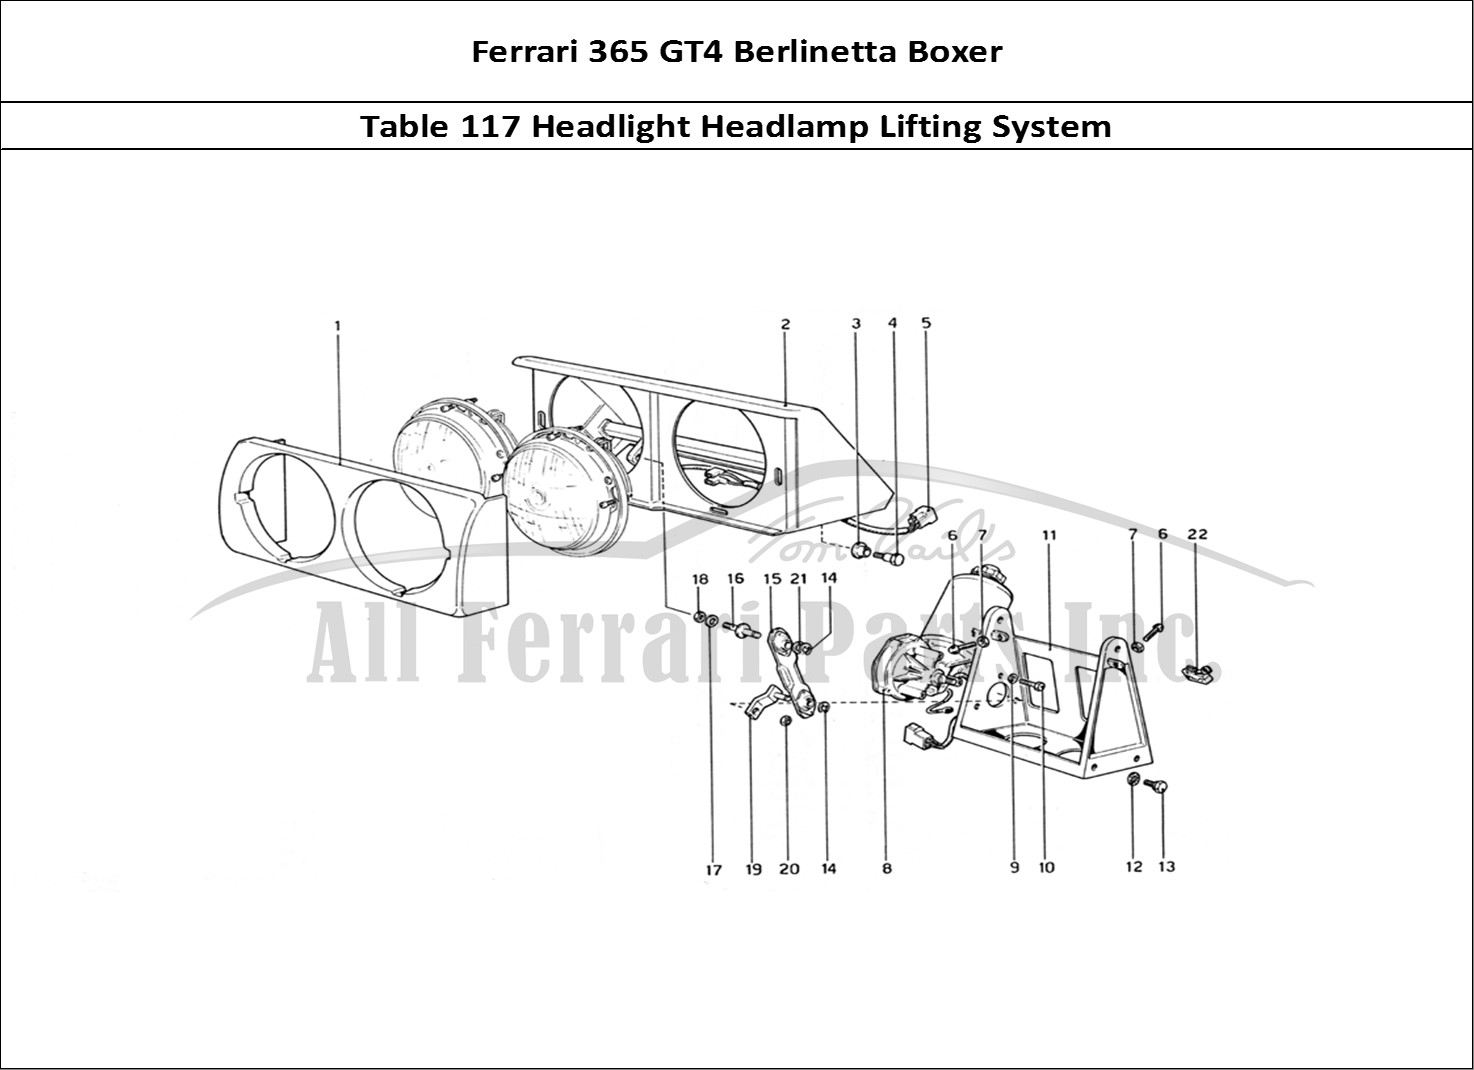 Ferrari Parts Ferrari 365 GT4 Berlinetta Boxer Page 117 Headlights Lifting Device